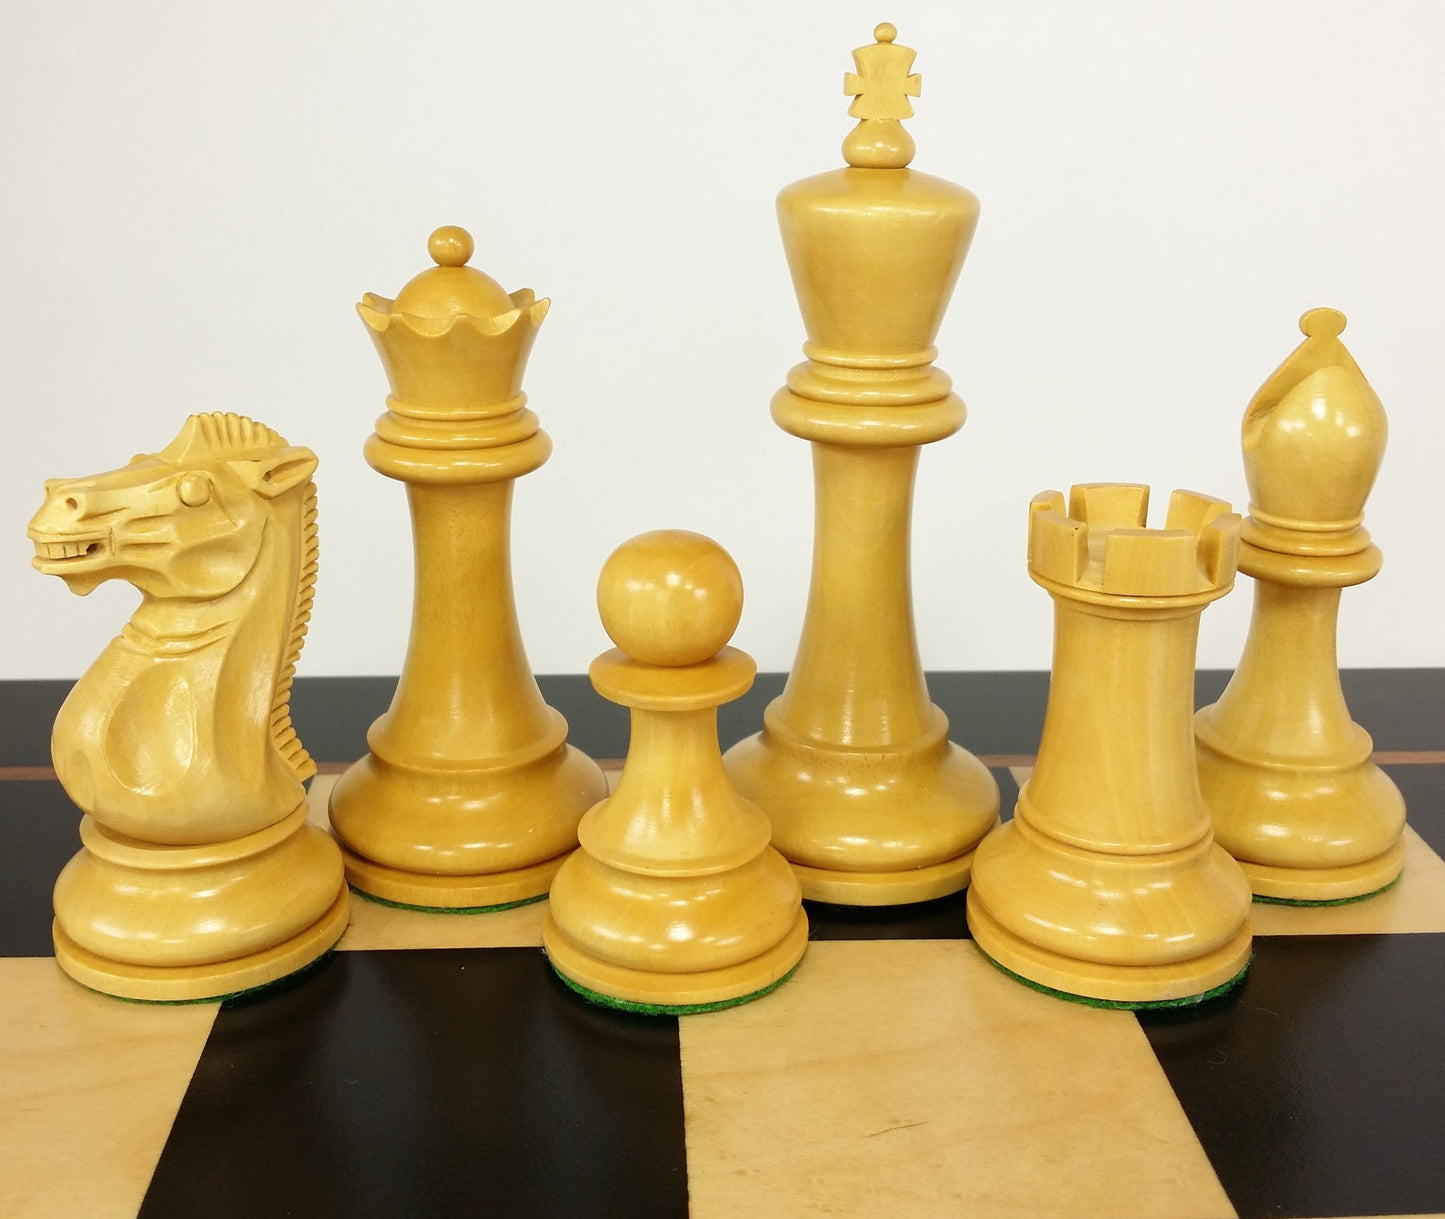 Black 4 5/8" Anderssen Staunton Wood Chess Set Large 22" Black & Maple Board